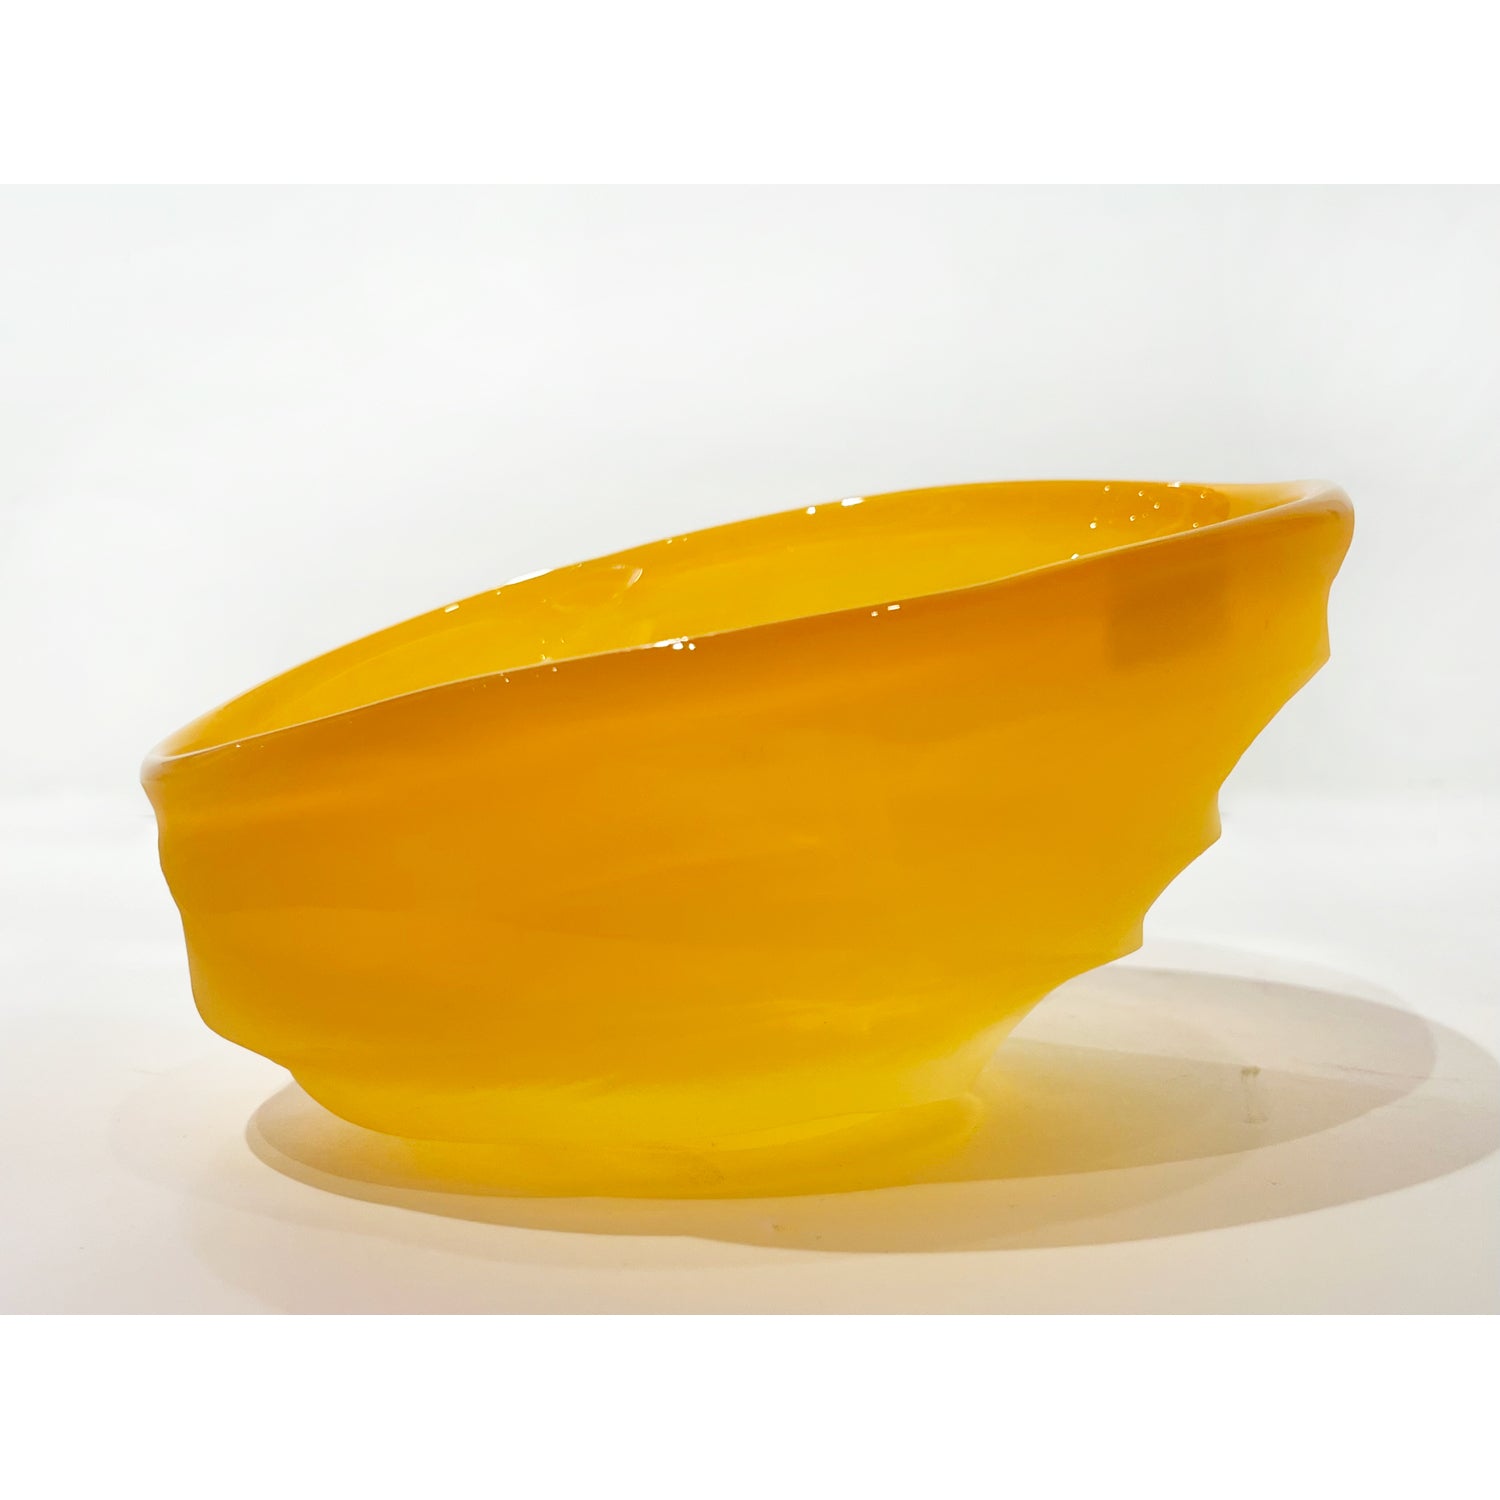 Brad Copping - Brilliant Yellow Undula Bowl, 4" x 7" x 6"